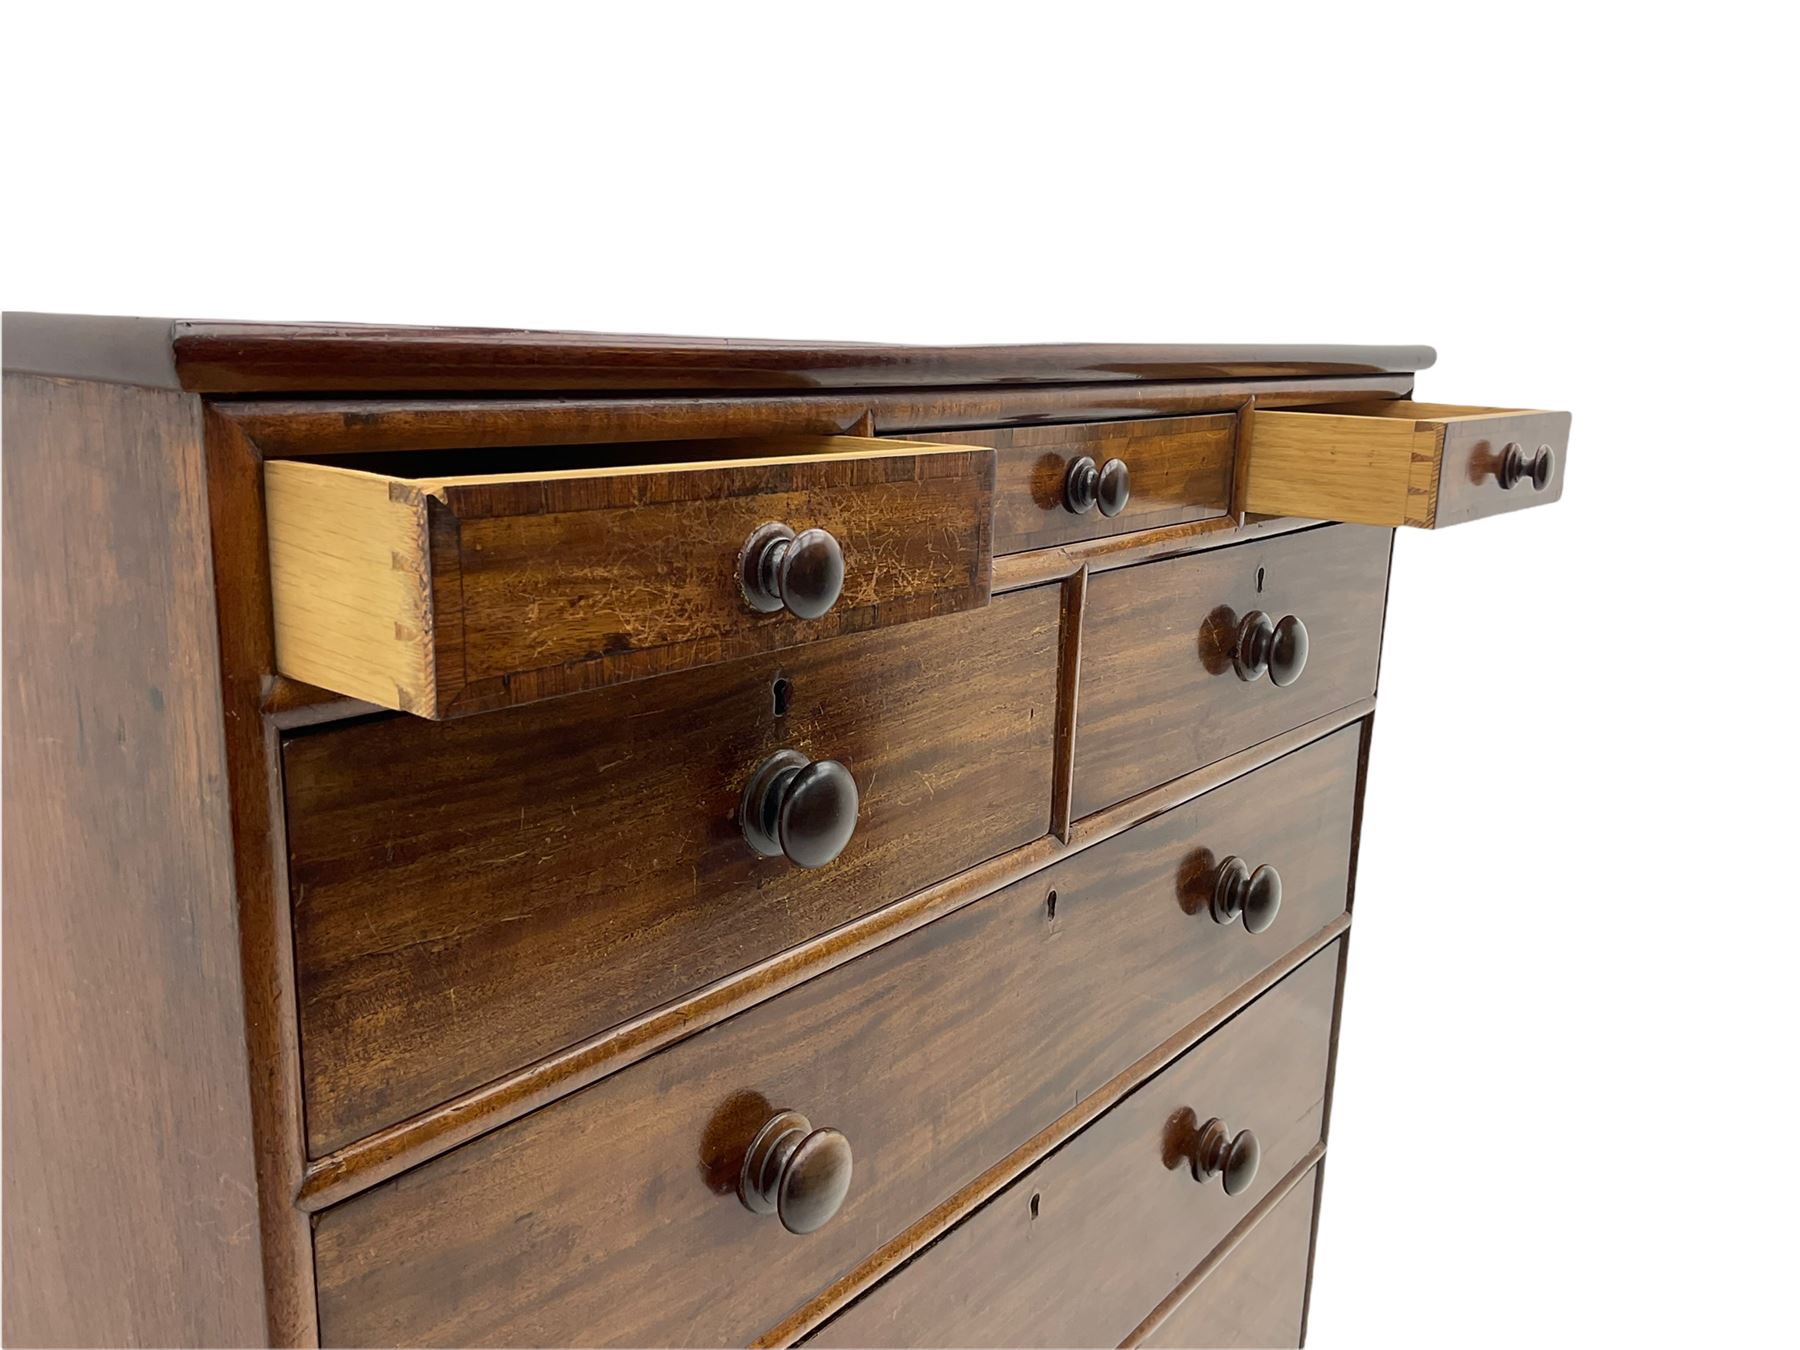 19th century mahogany chest - Image 9 of 14